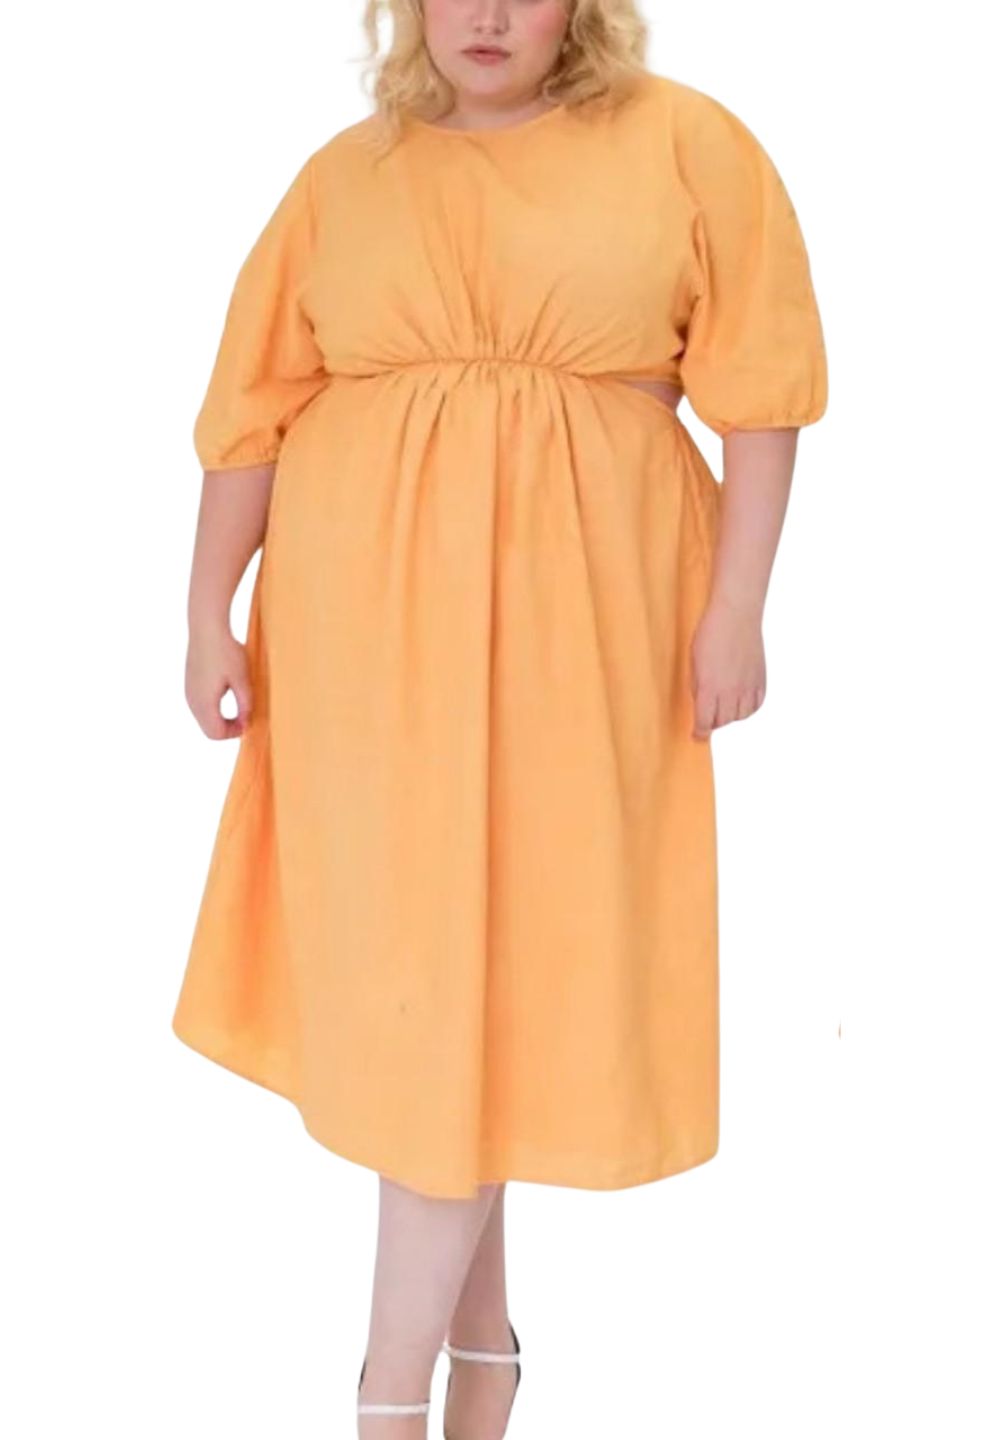 WRAY Dune Exposed Back Midi Linen Blend Dress, Size L